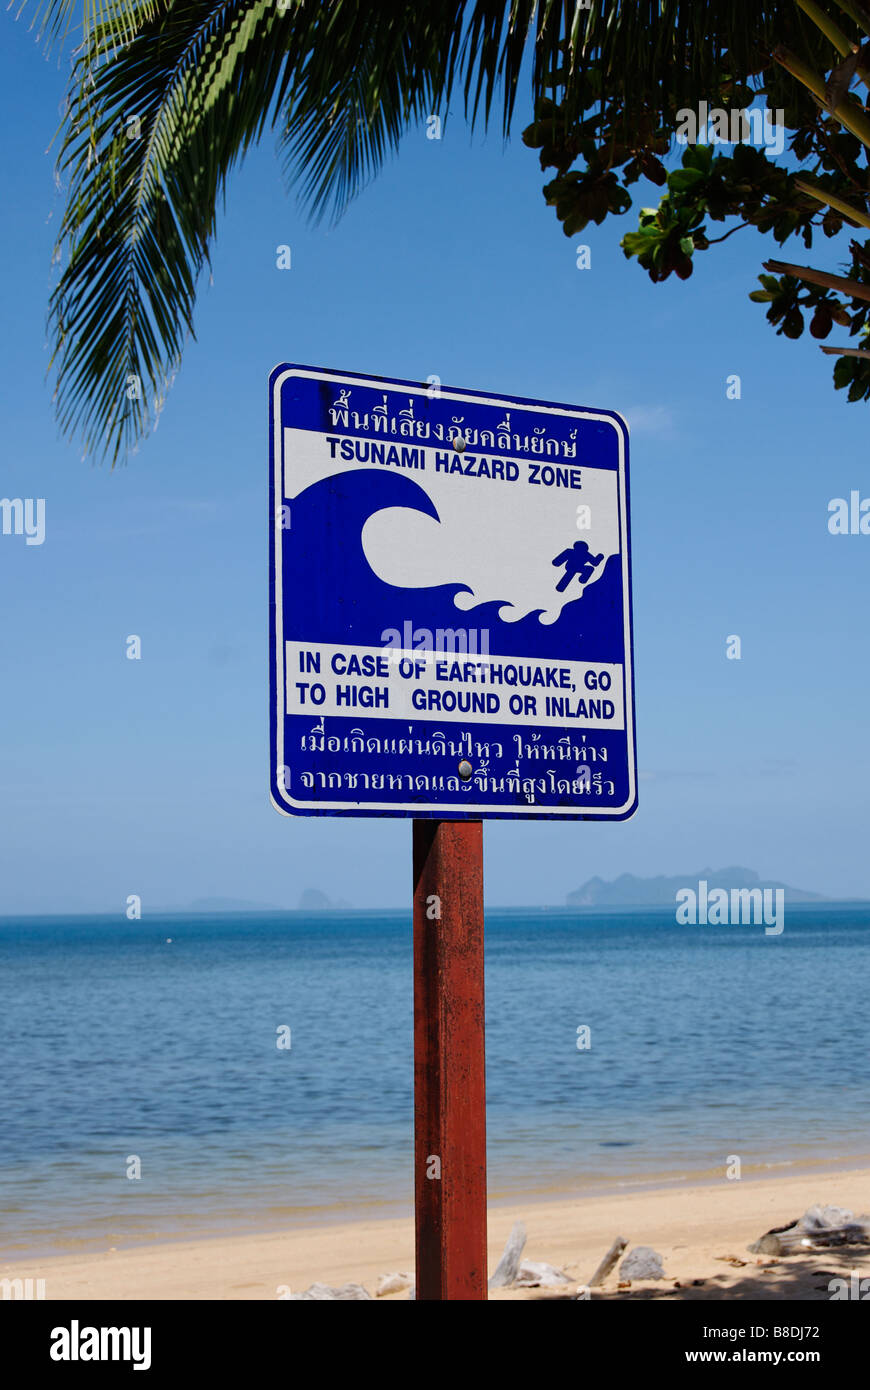 Tsunami hazard zone sign on Koh Libong island Thailand Stock Photo